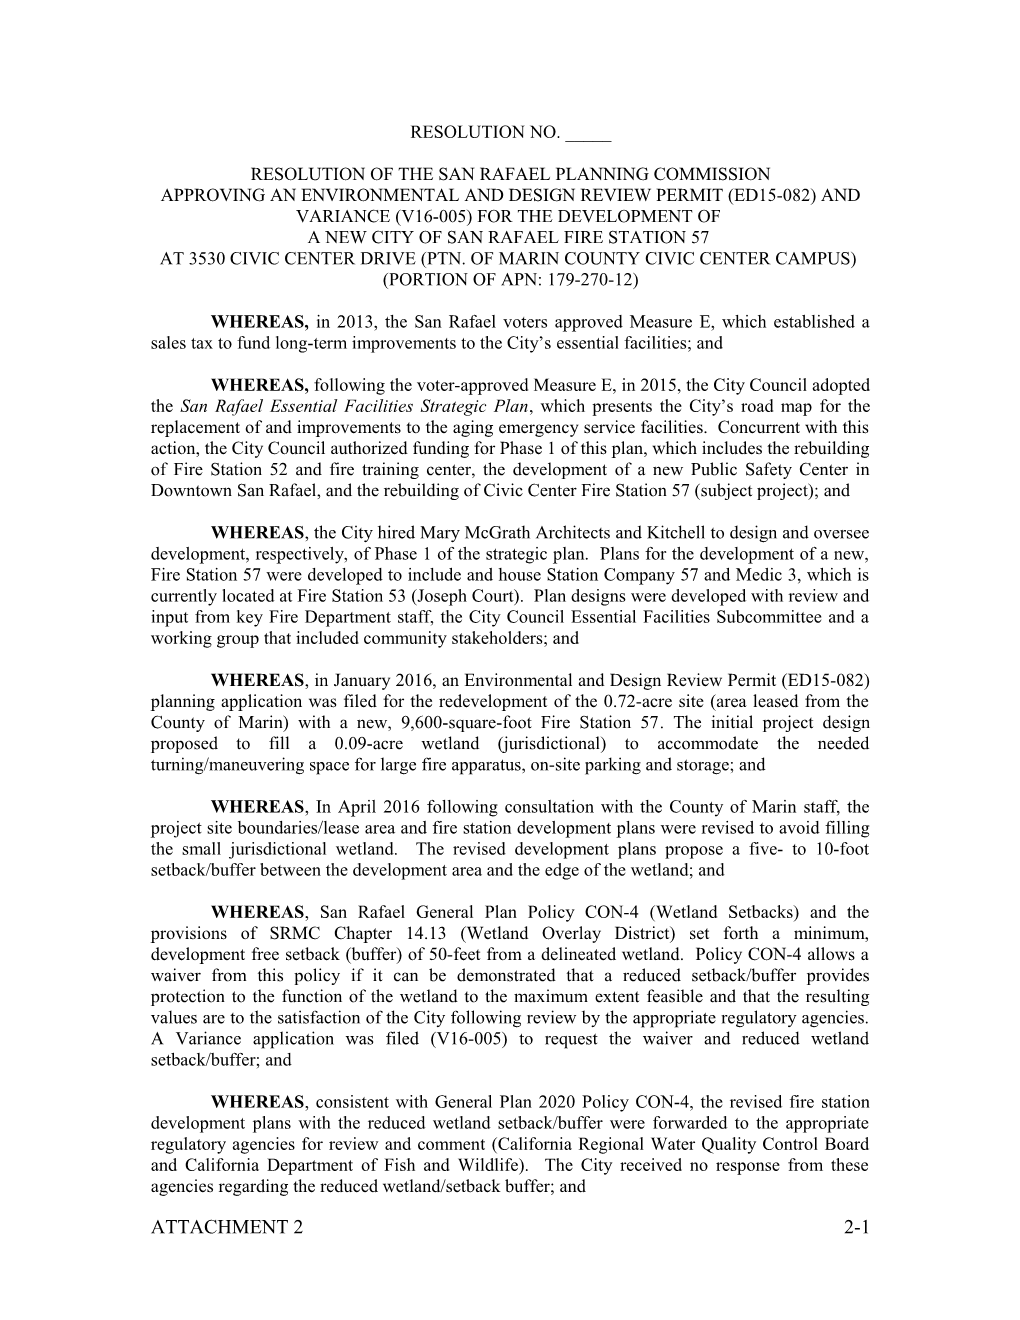 Resolution of the San Rafaelplanning Commission